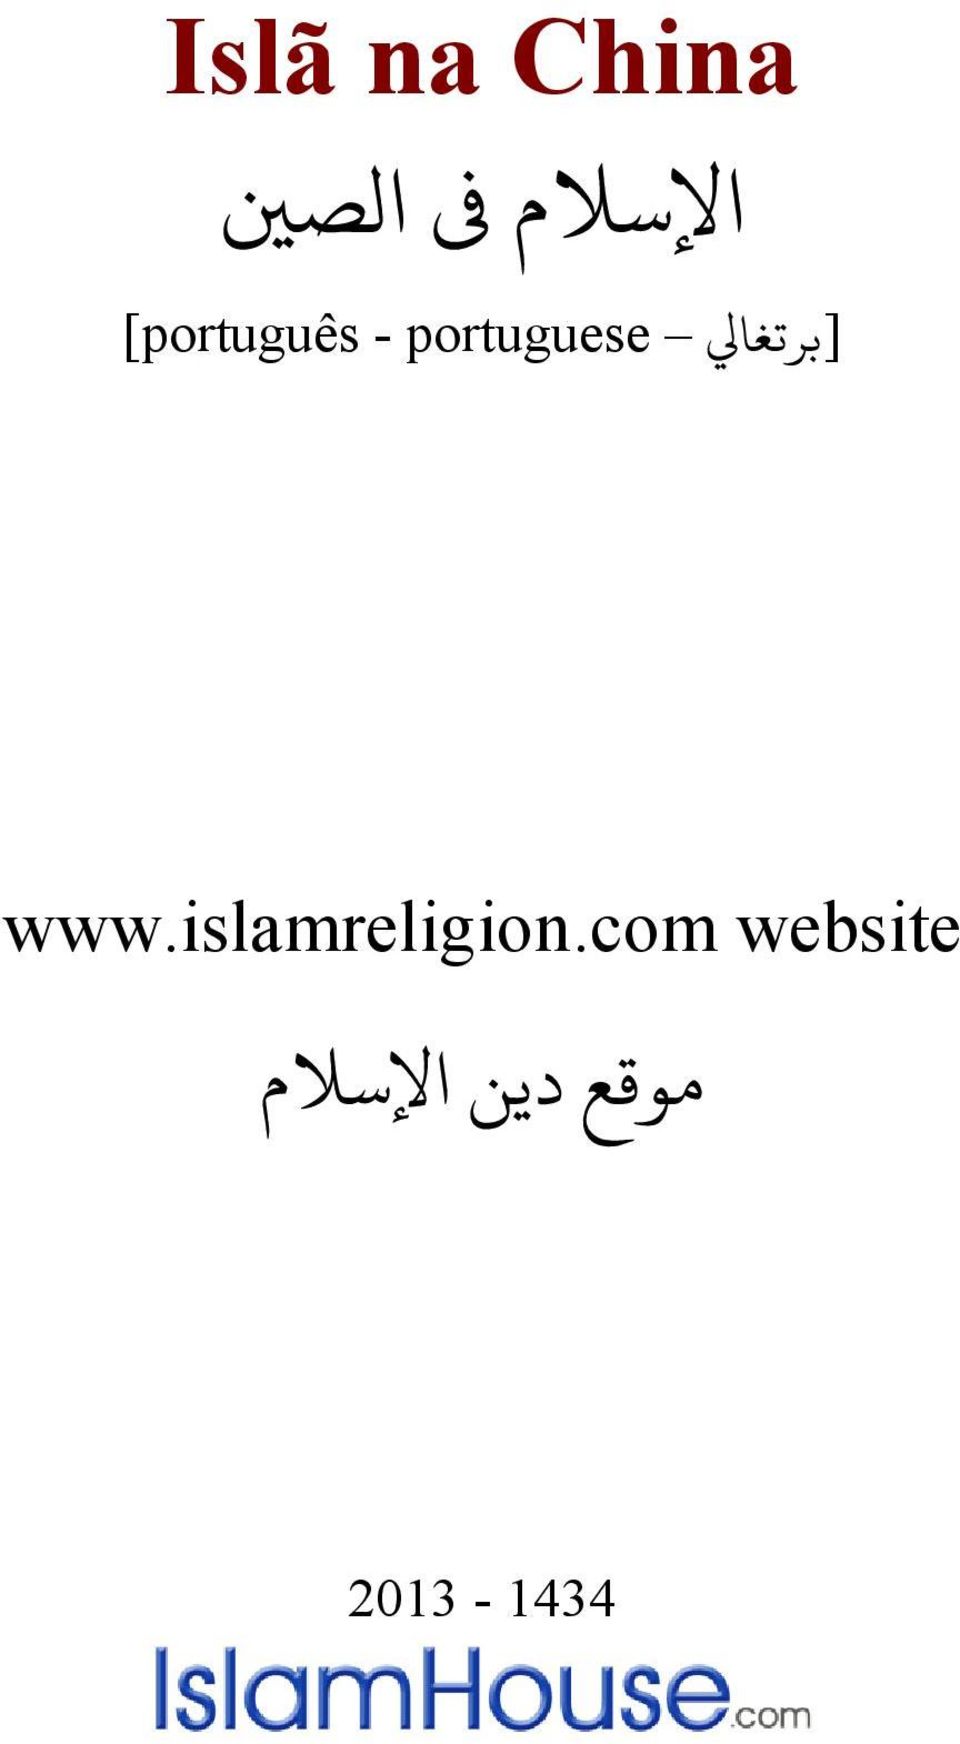 - www.islamreligion.